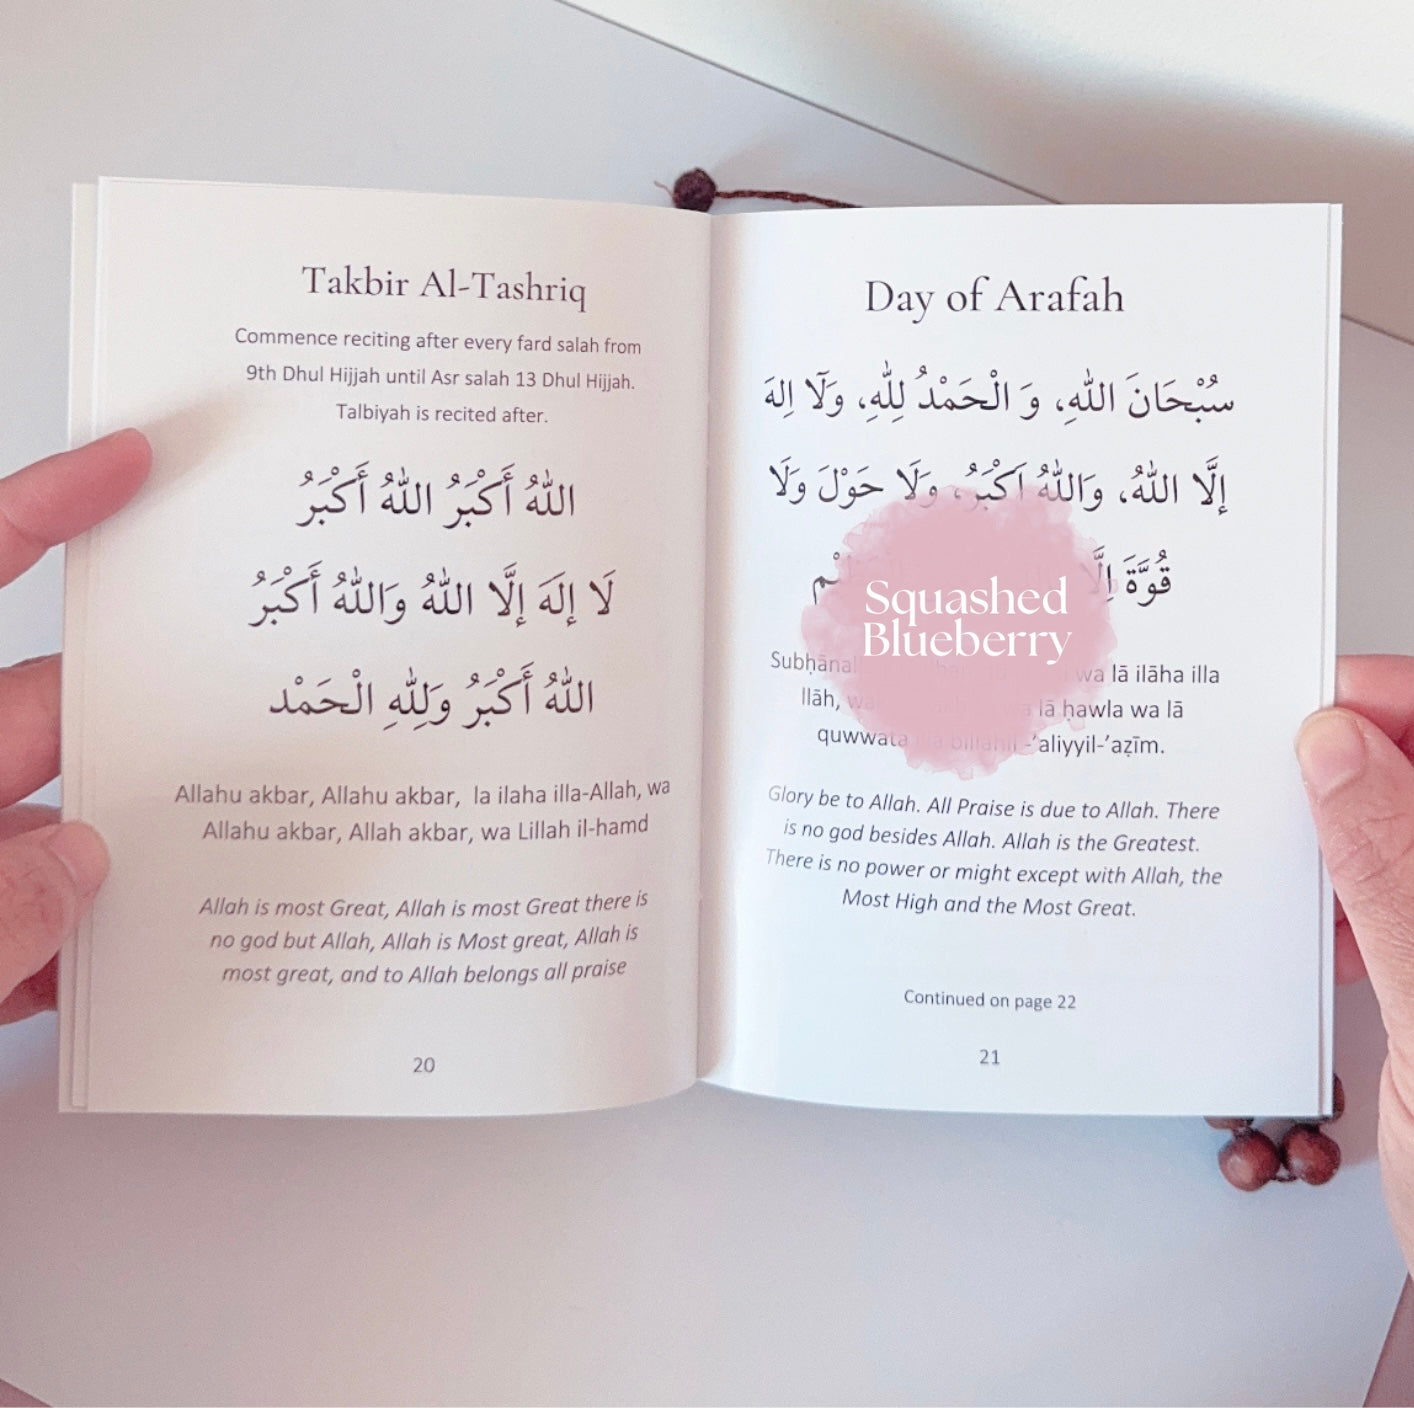 Duas for Hajj booklet A6 - Large Font